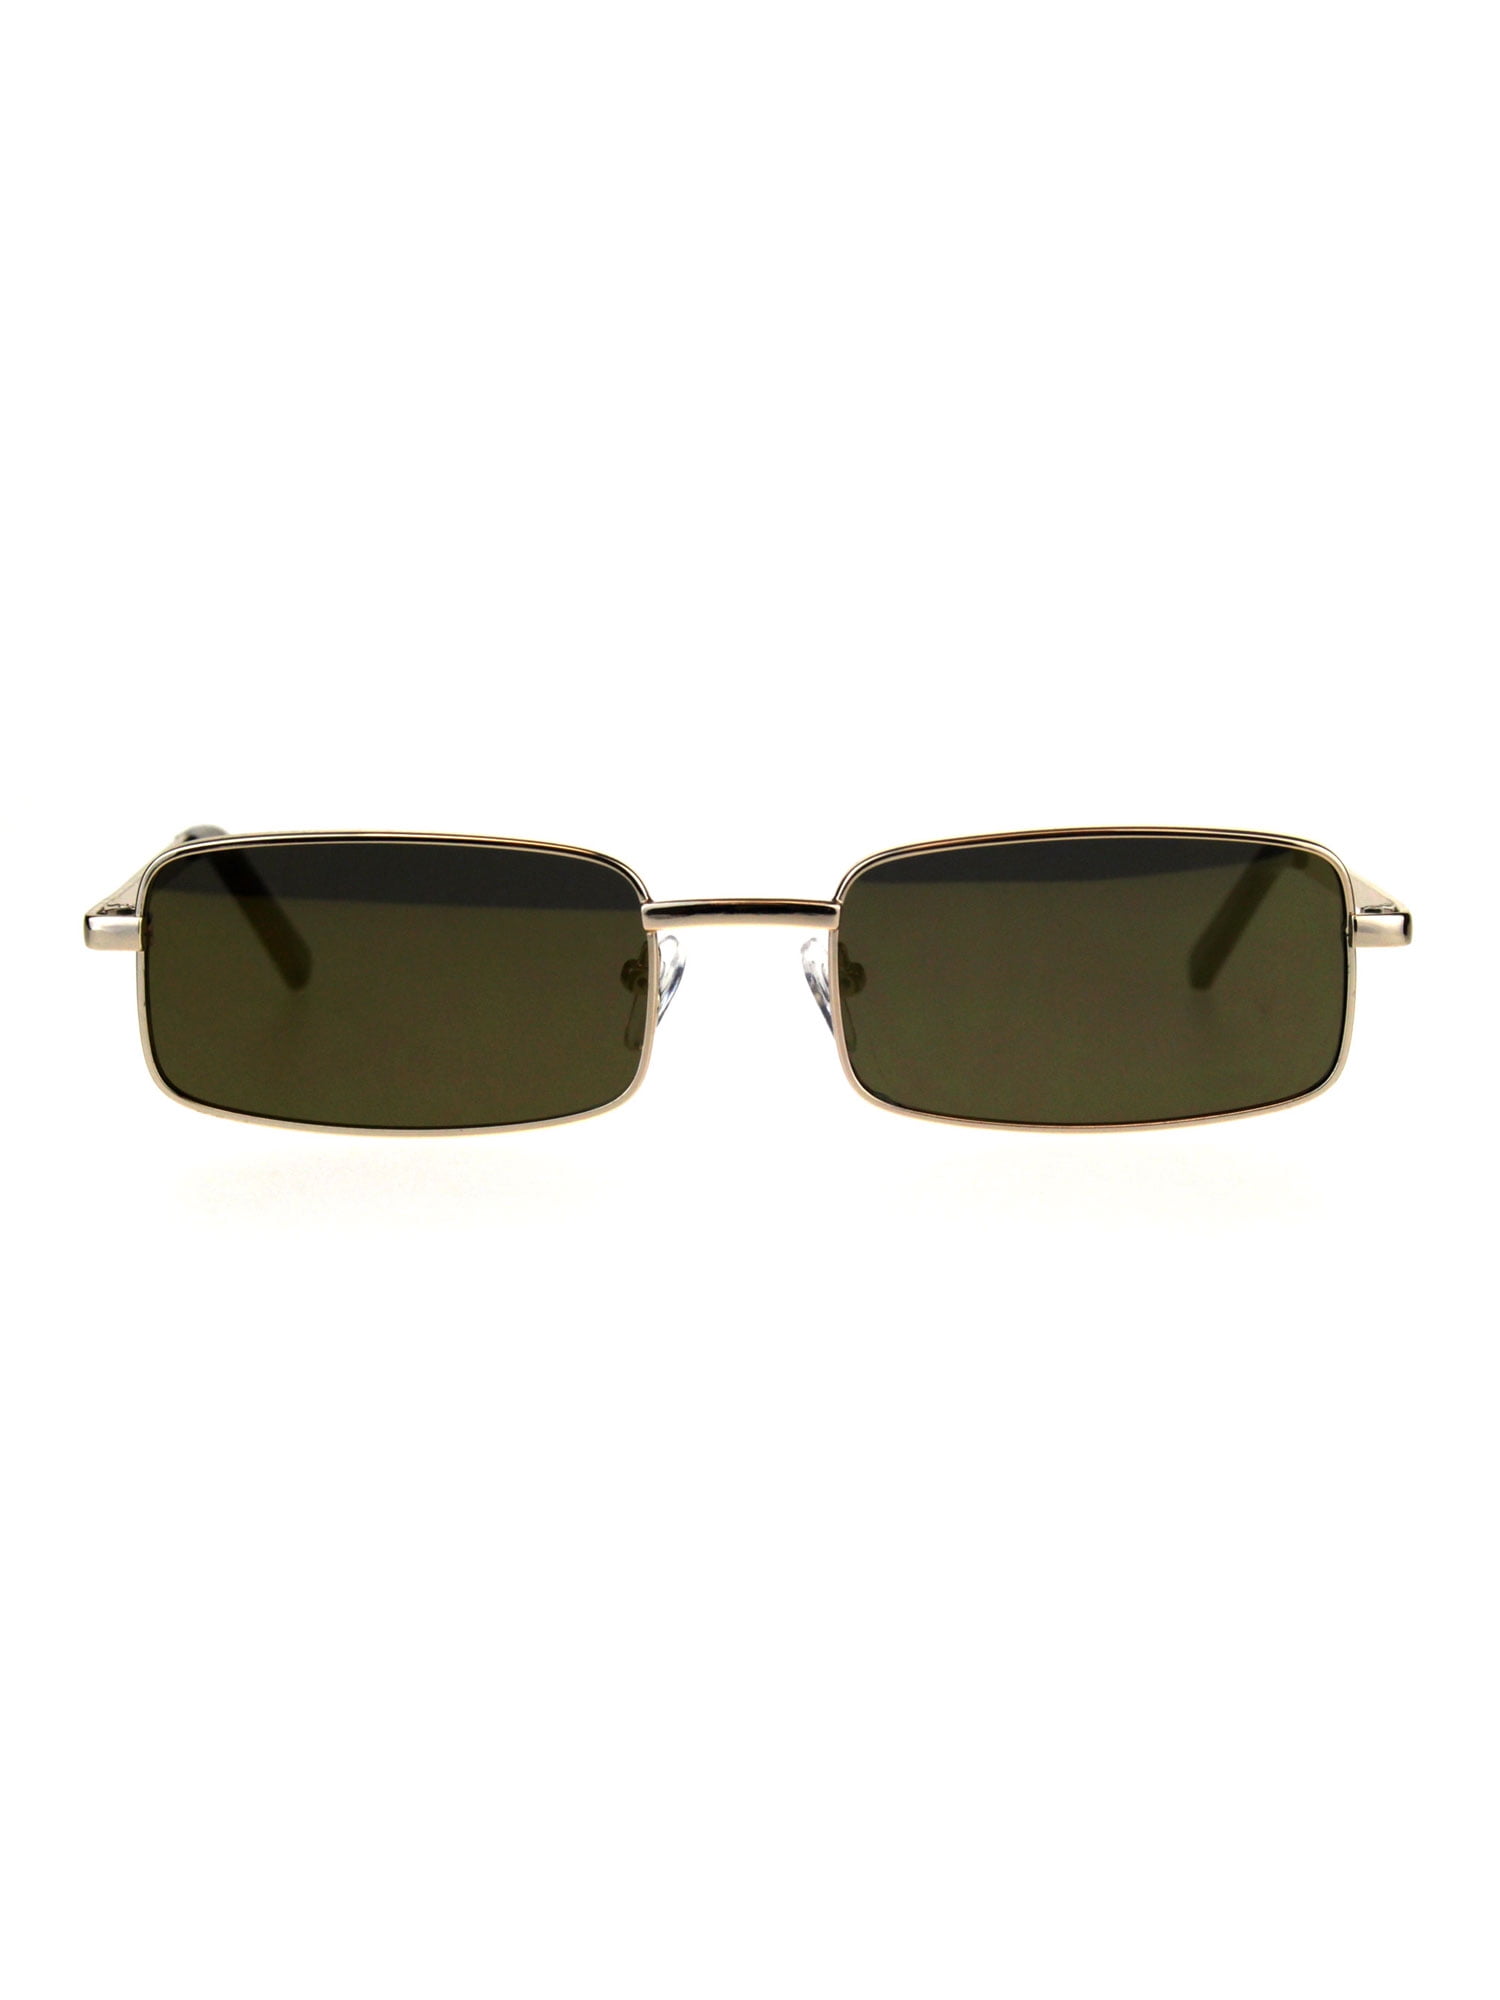 Mens Retro Vintage Narrow Rectangular Og Mirror Lens Sunglasses All Gold